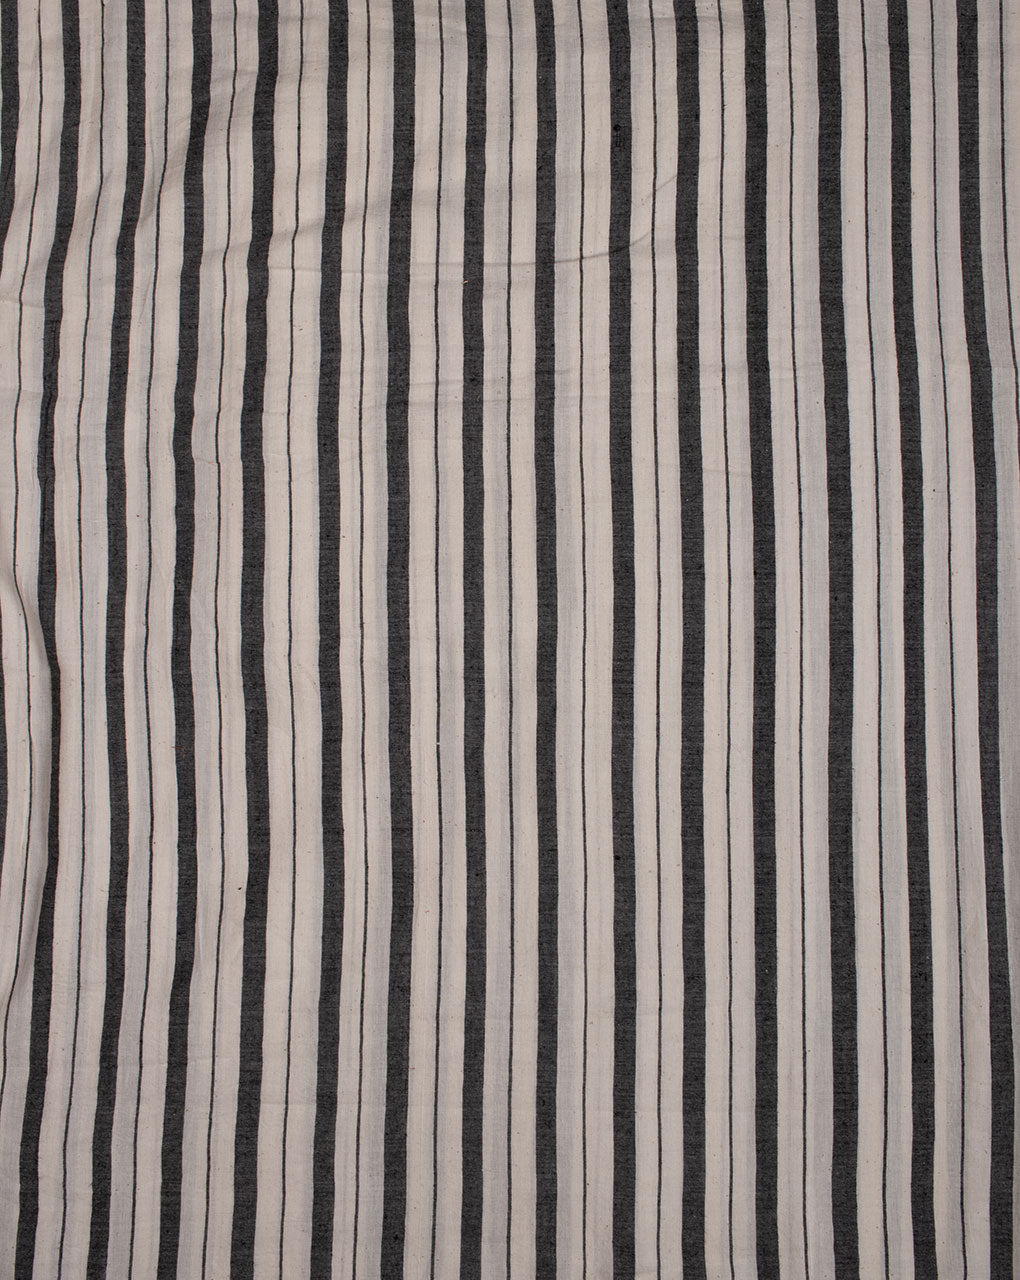 Woven Premium Pure Handloom Cotton Muslin Fabric - Fabriclore.com